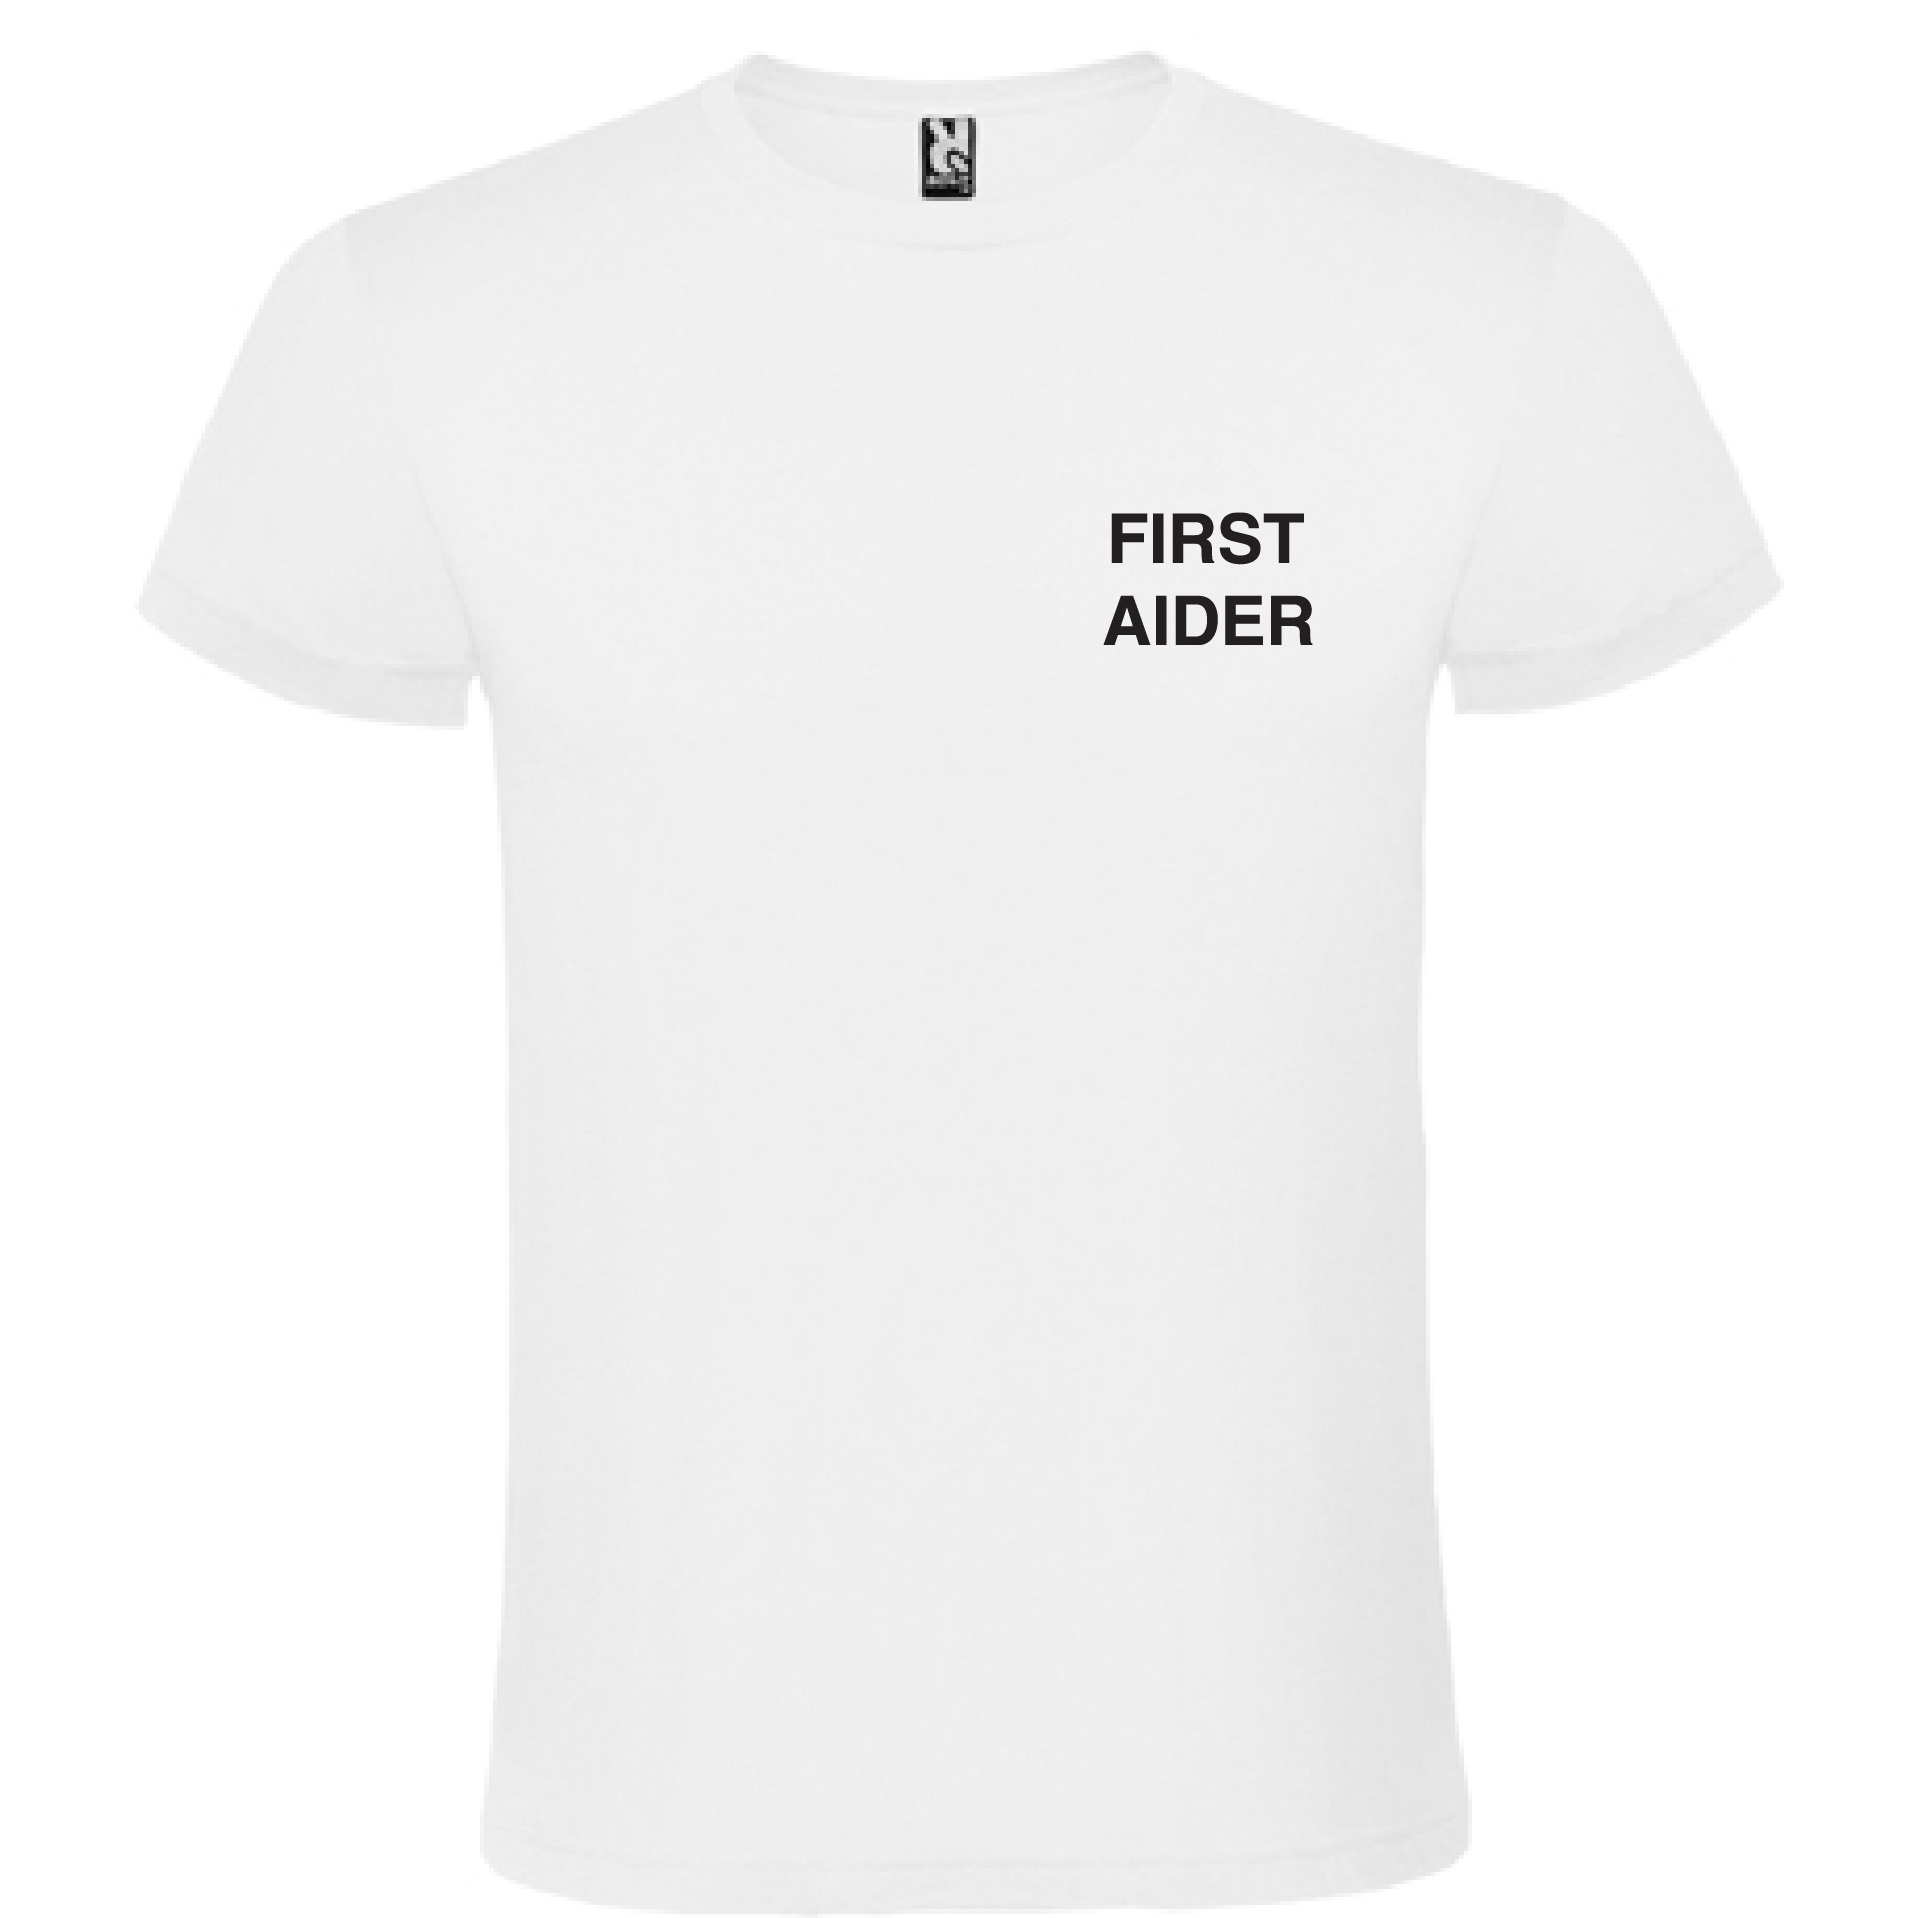 t-shirt_first-aider_front_white.jpg